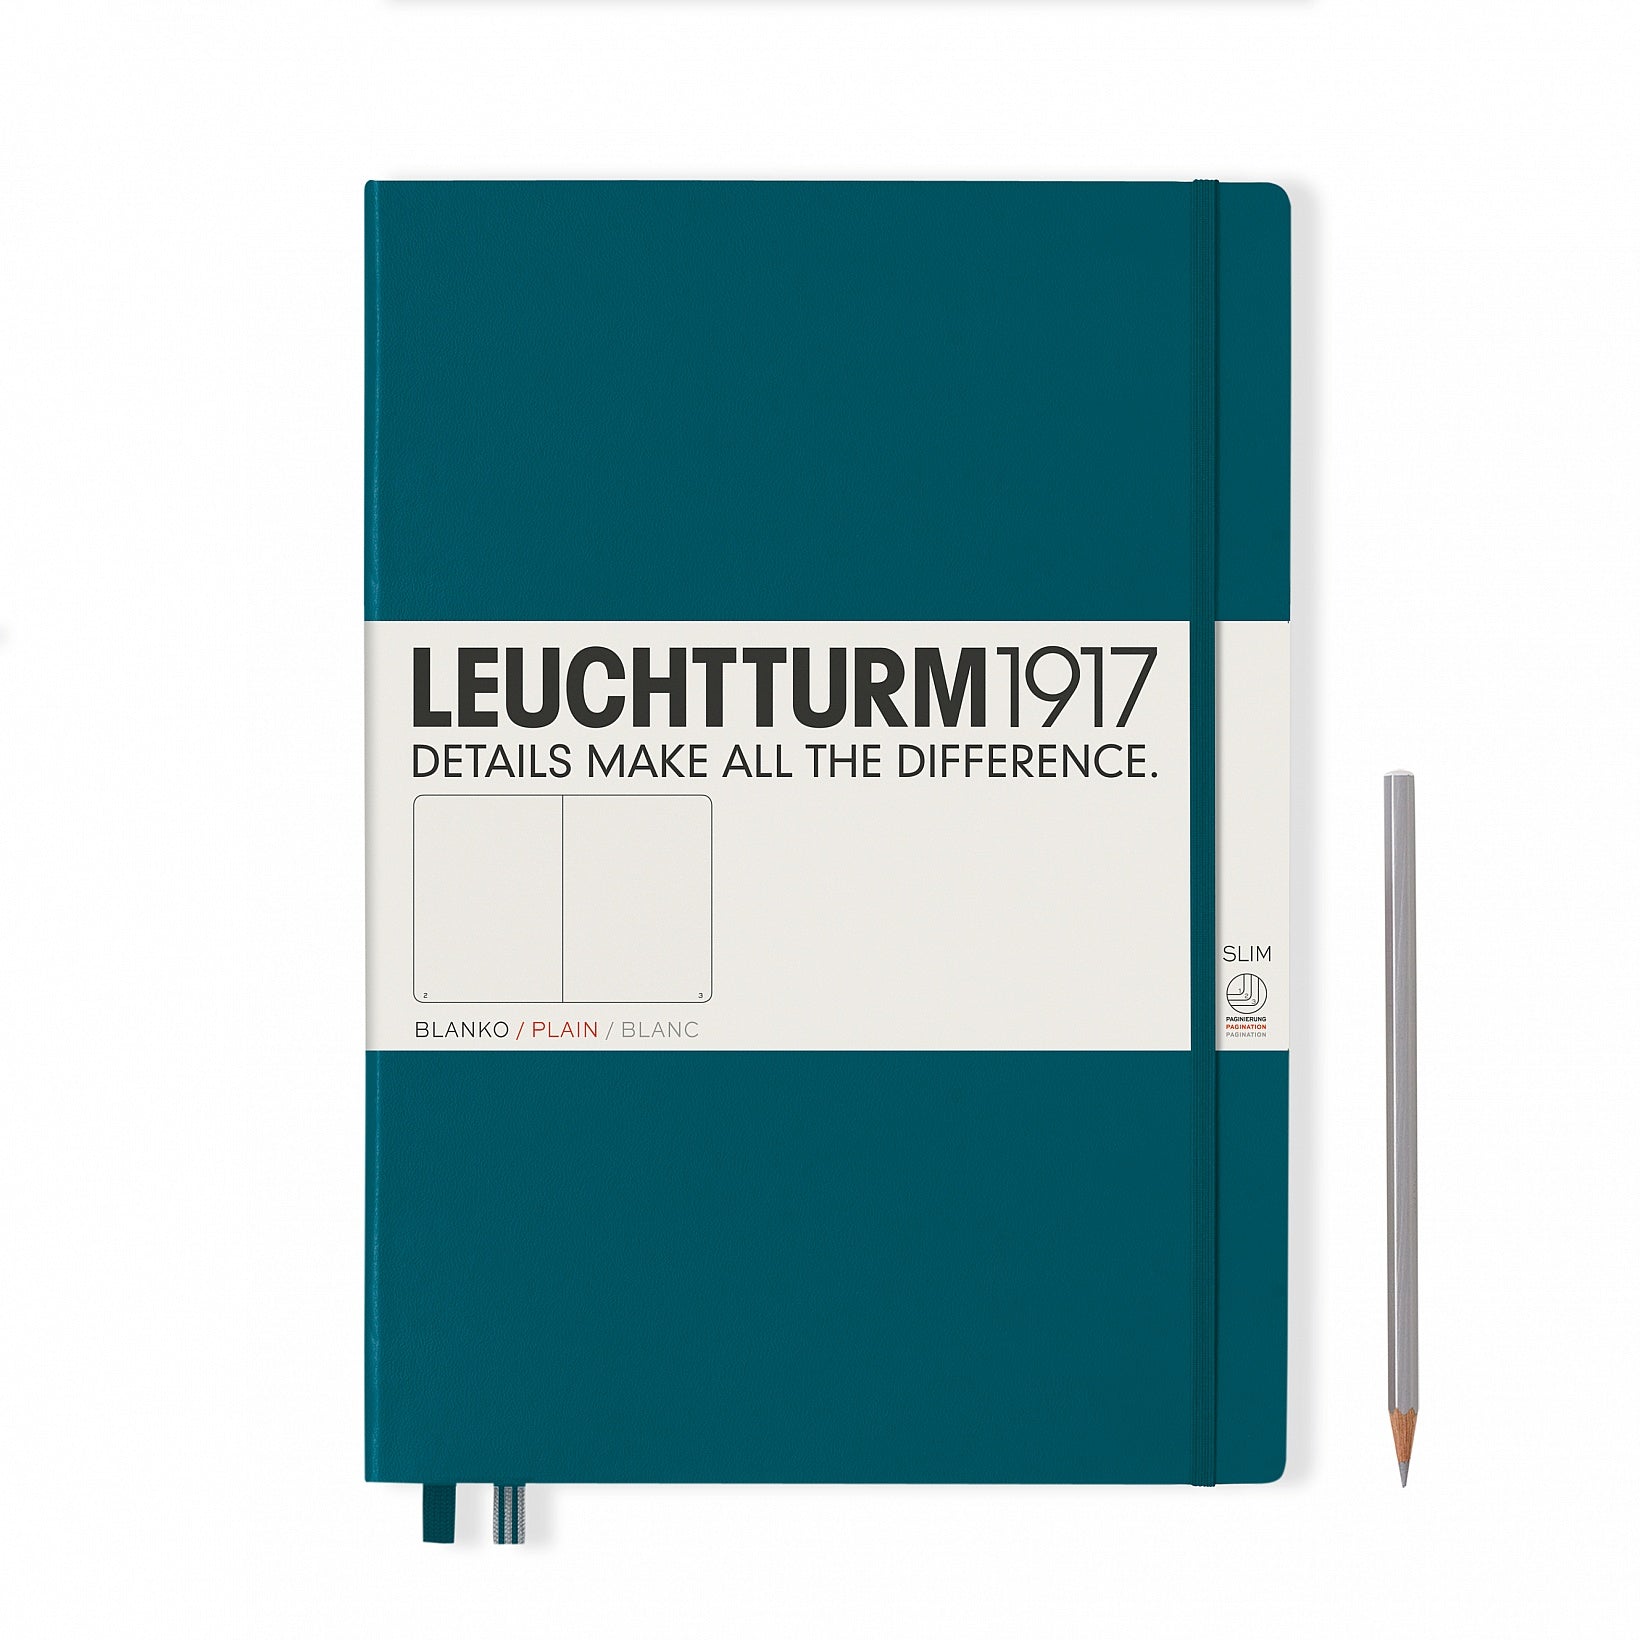 Leuchtturm 1917 Notebook A5 Edition 120g Nordic Blue Plain Hard Cover